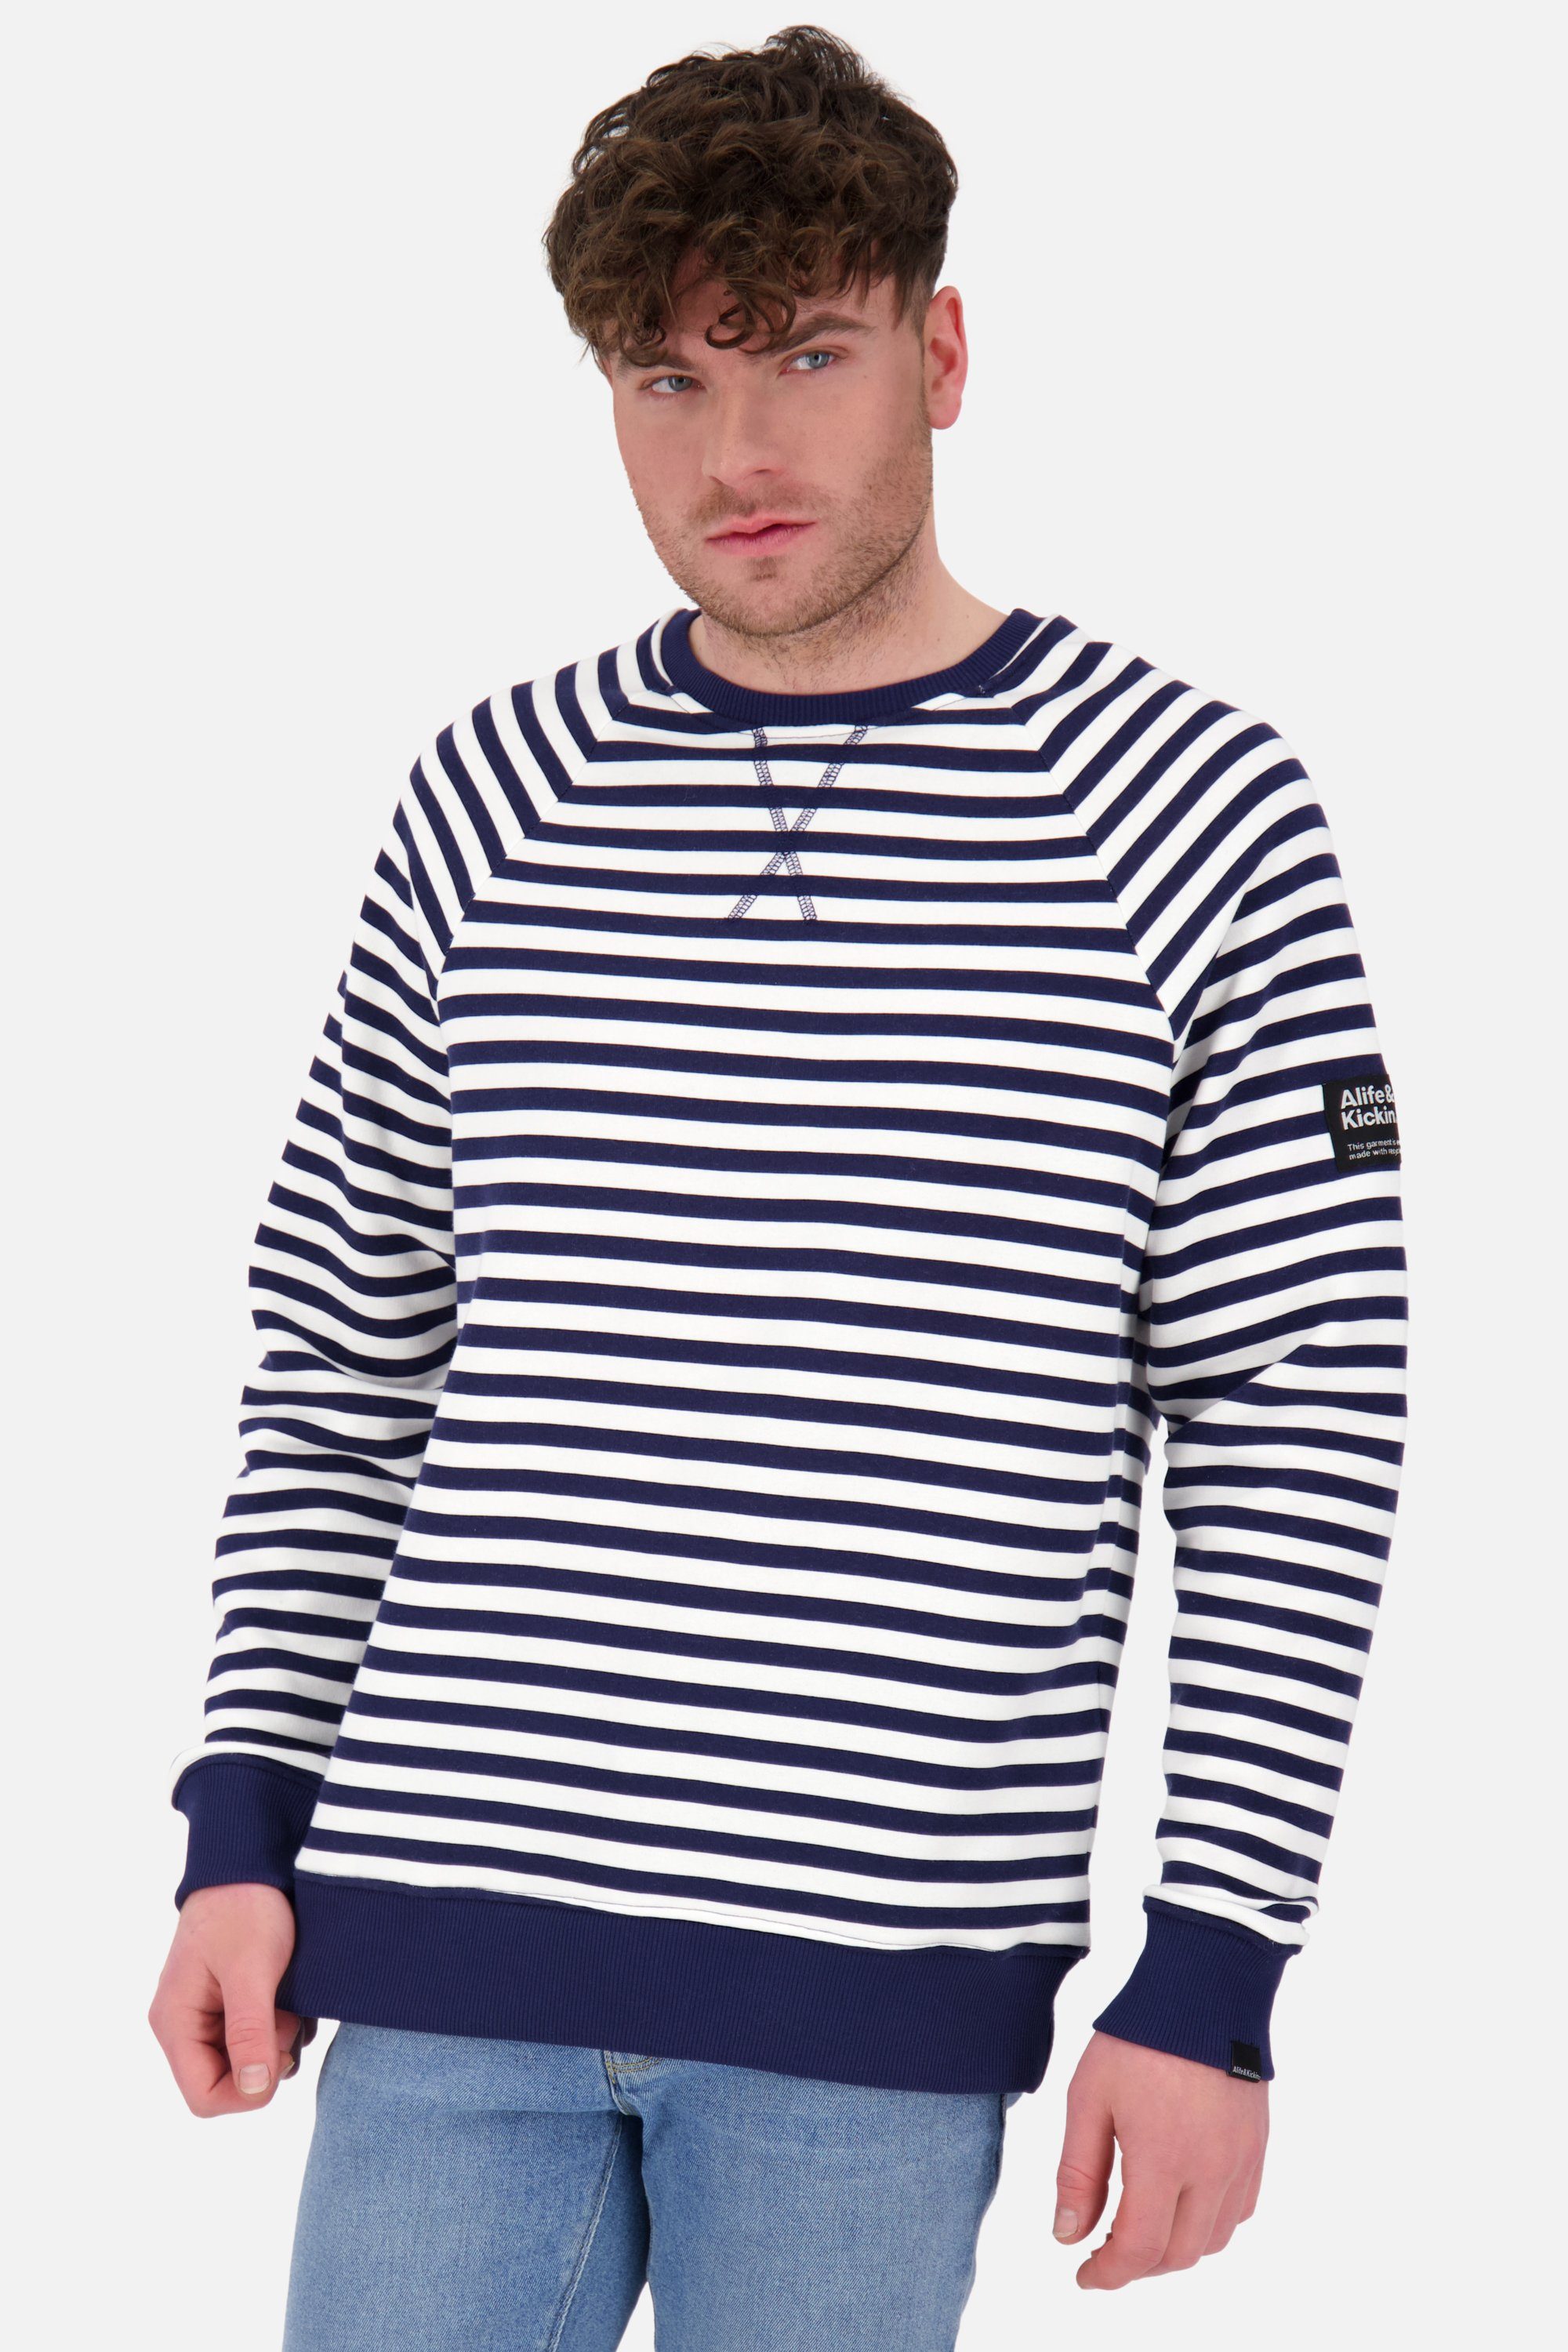 Alife & Rundhalspullover, Sweatshirt Kickin Sweatshirt Herren Z BorisAK marine Pullover